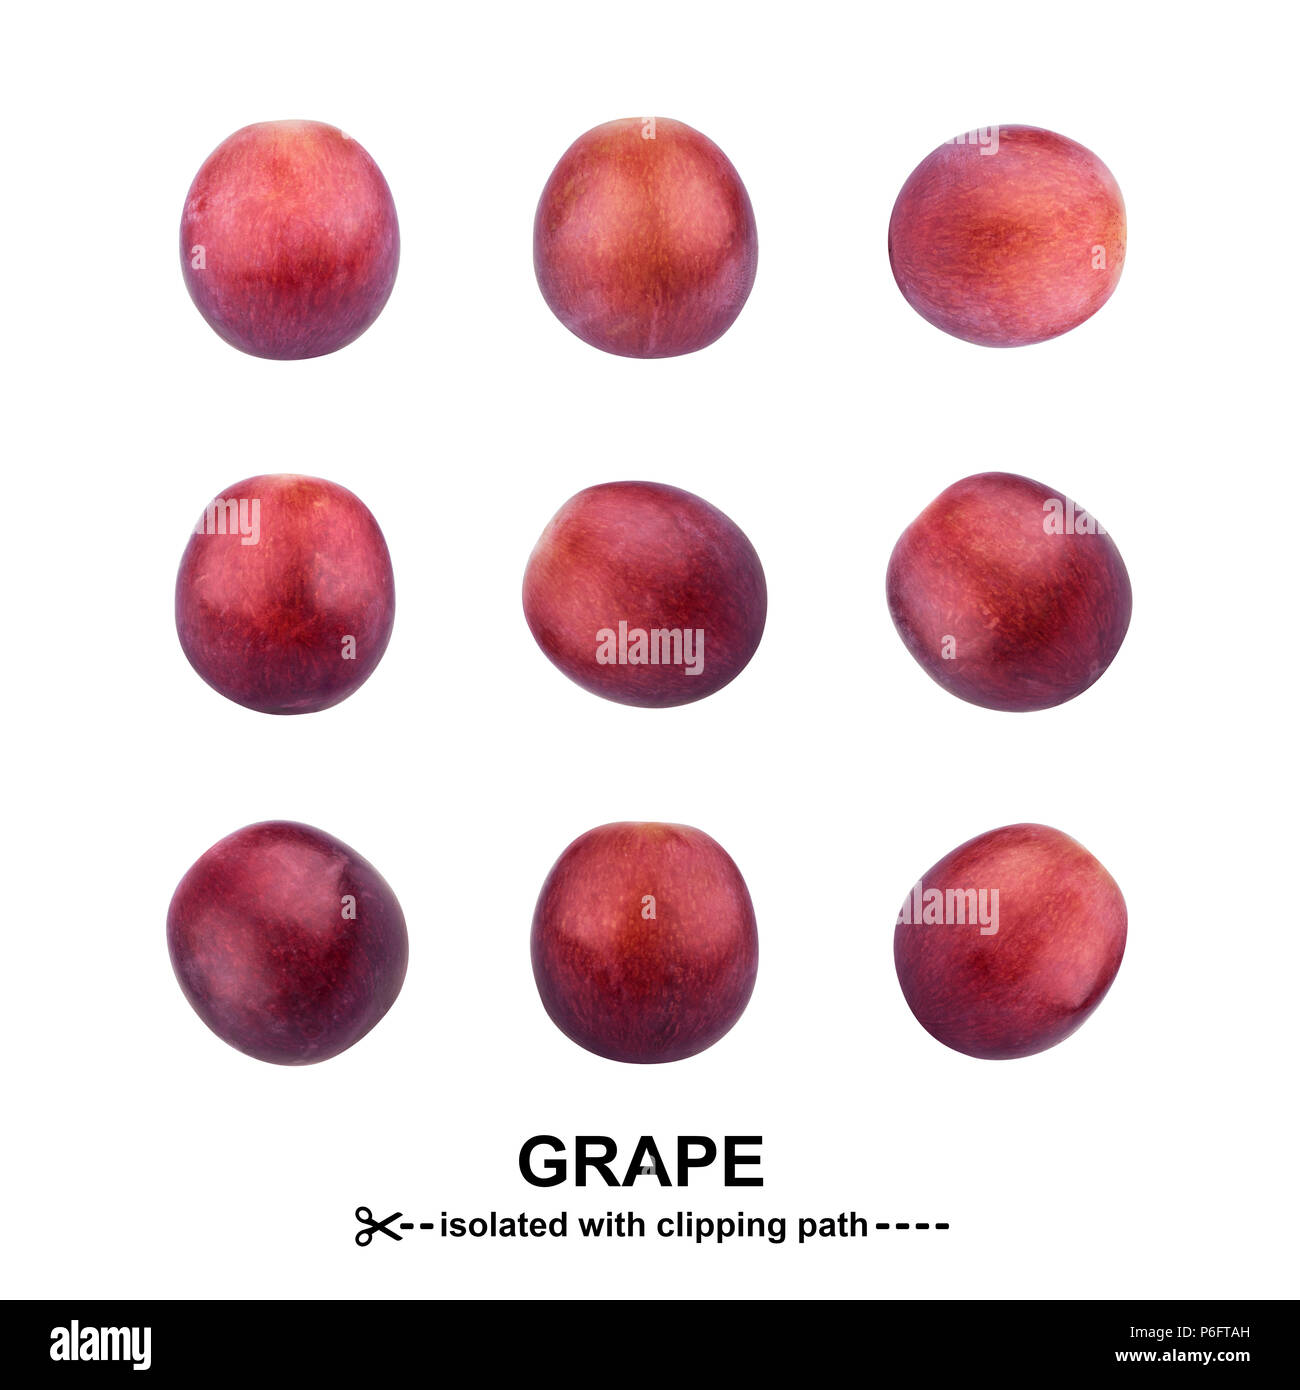 Grape isolated on white background Stock Photo